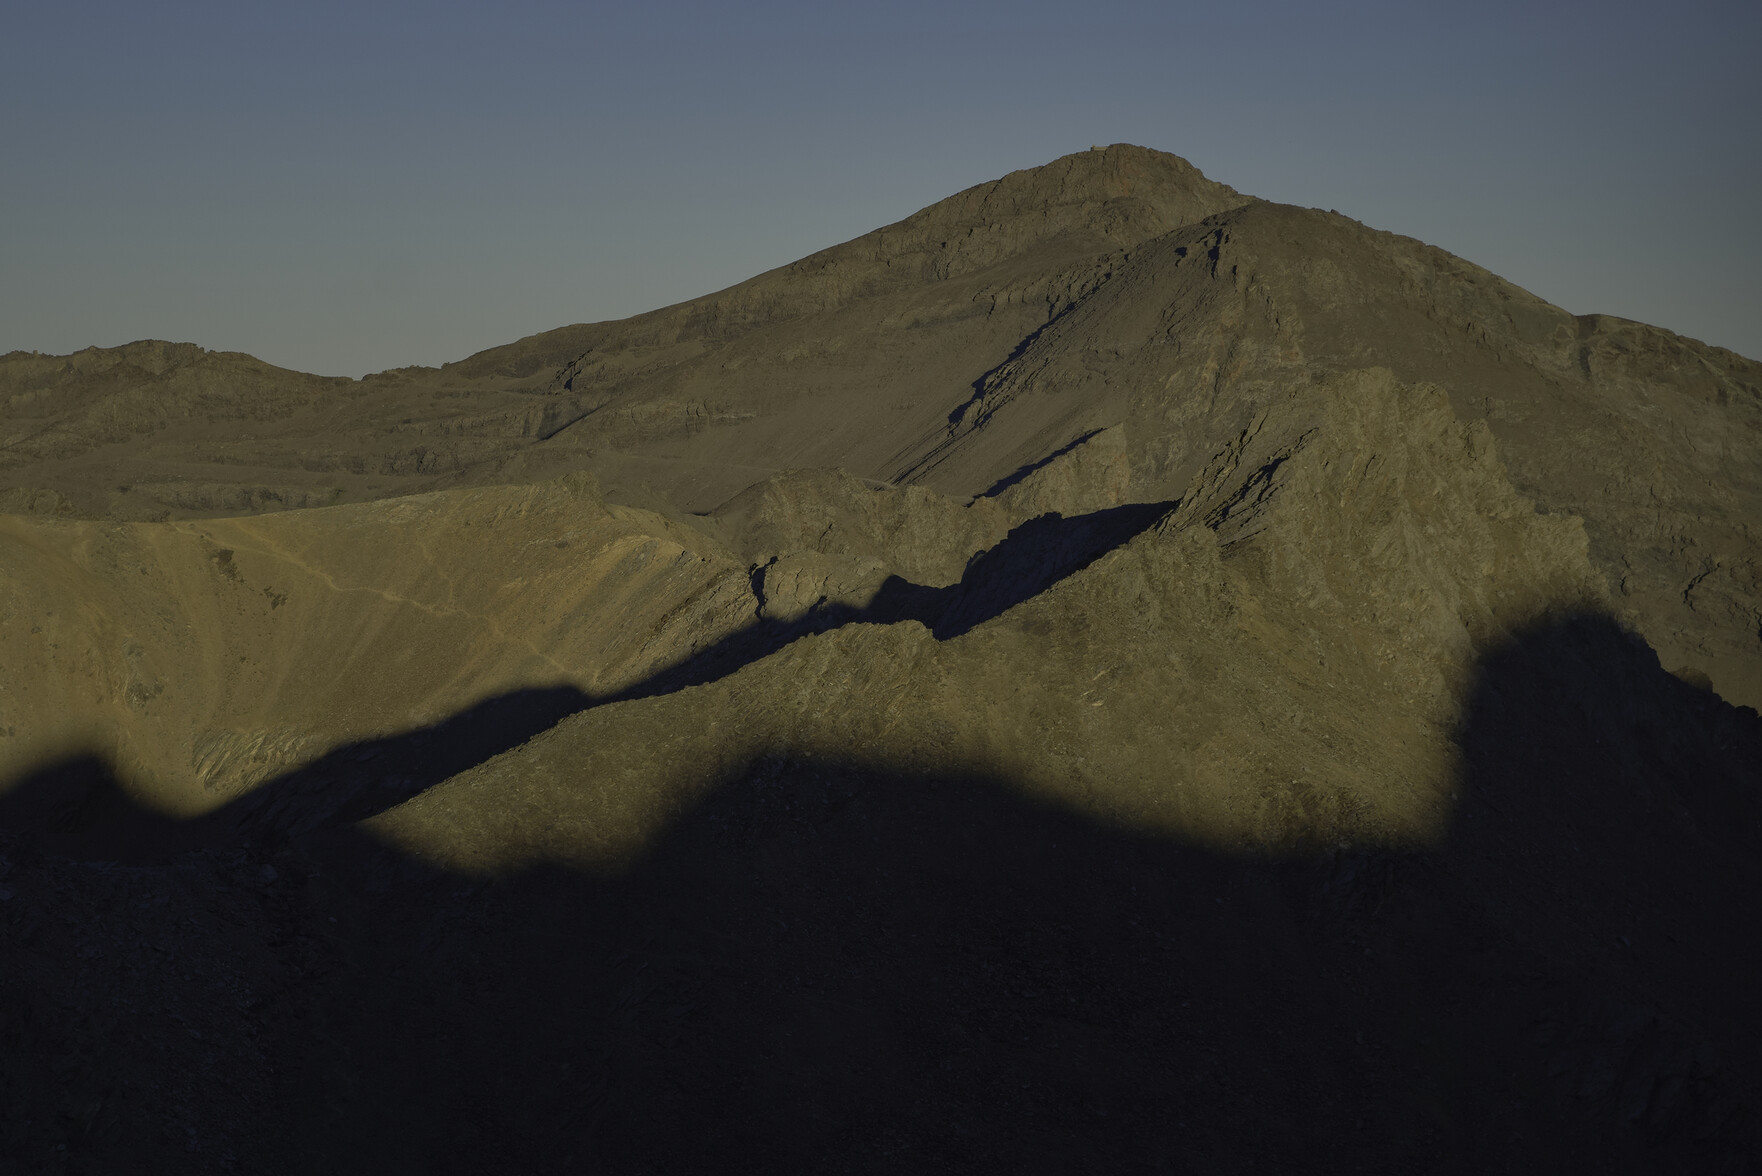 Puntal de la Caldera, Loma Pelada, Cerro los Machos, Veleta and Loma Pua standing out above the shadows